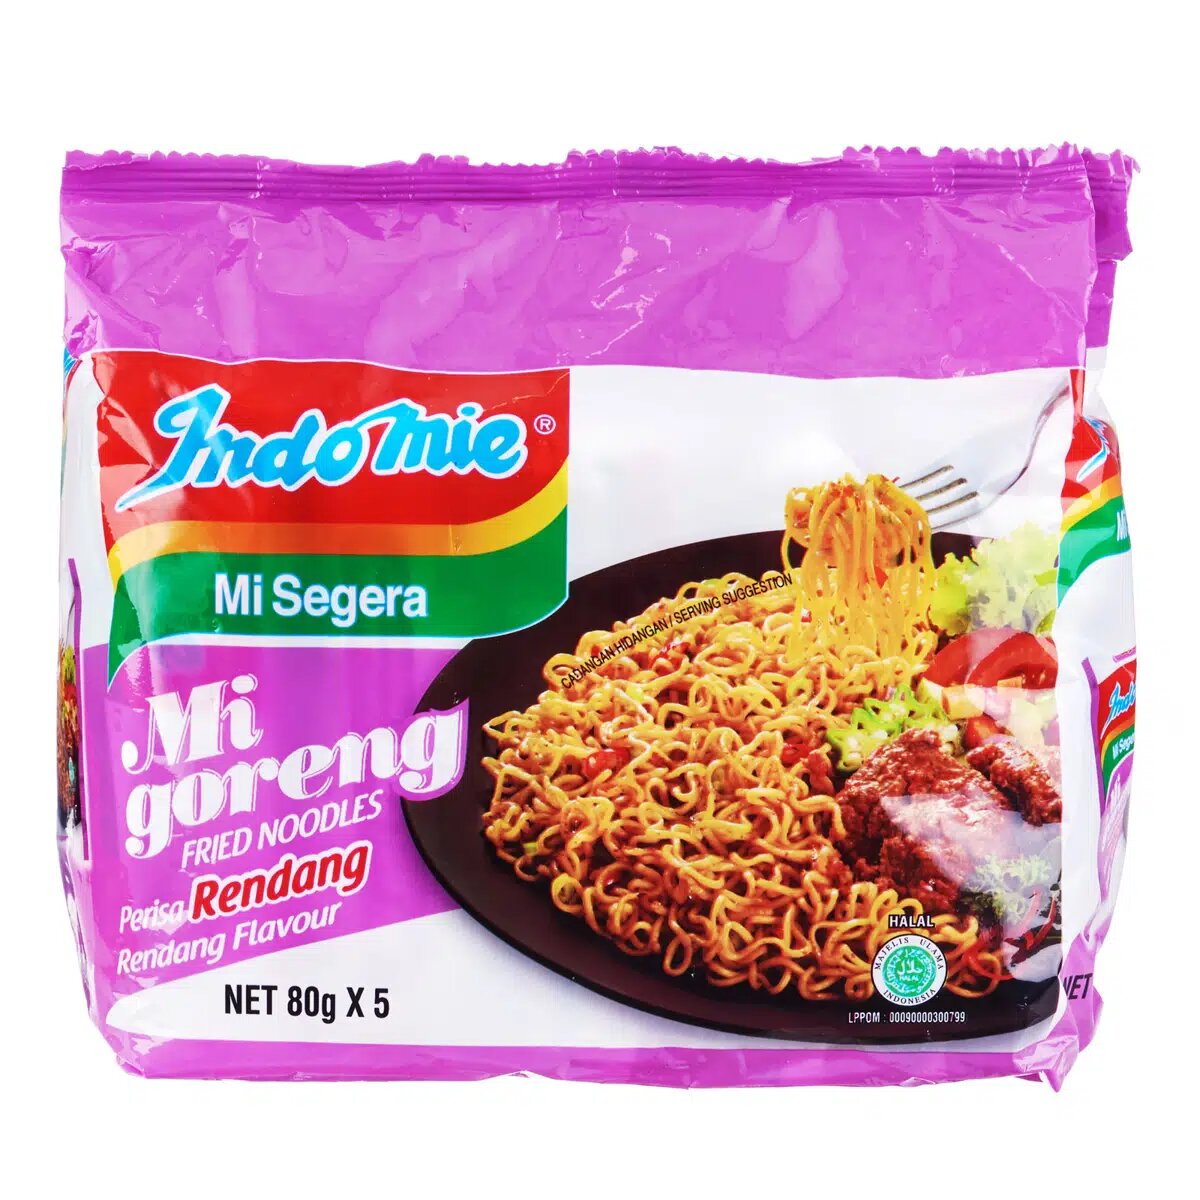 Indomie Mi Goreng Instant Noodles - Rendang